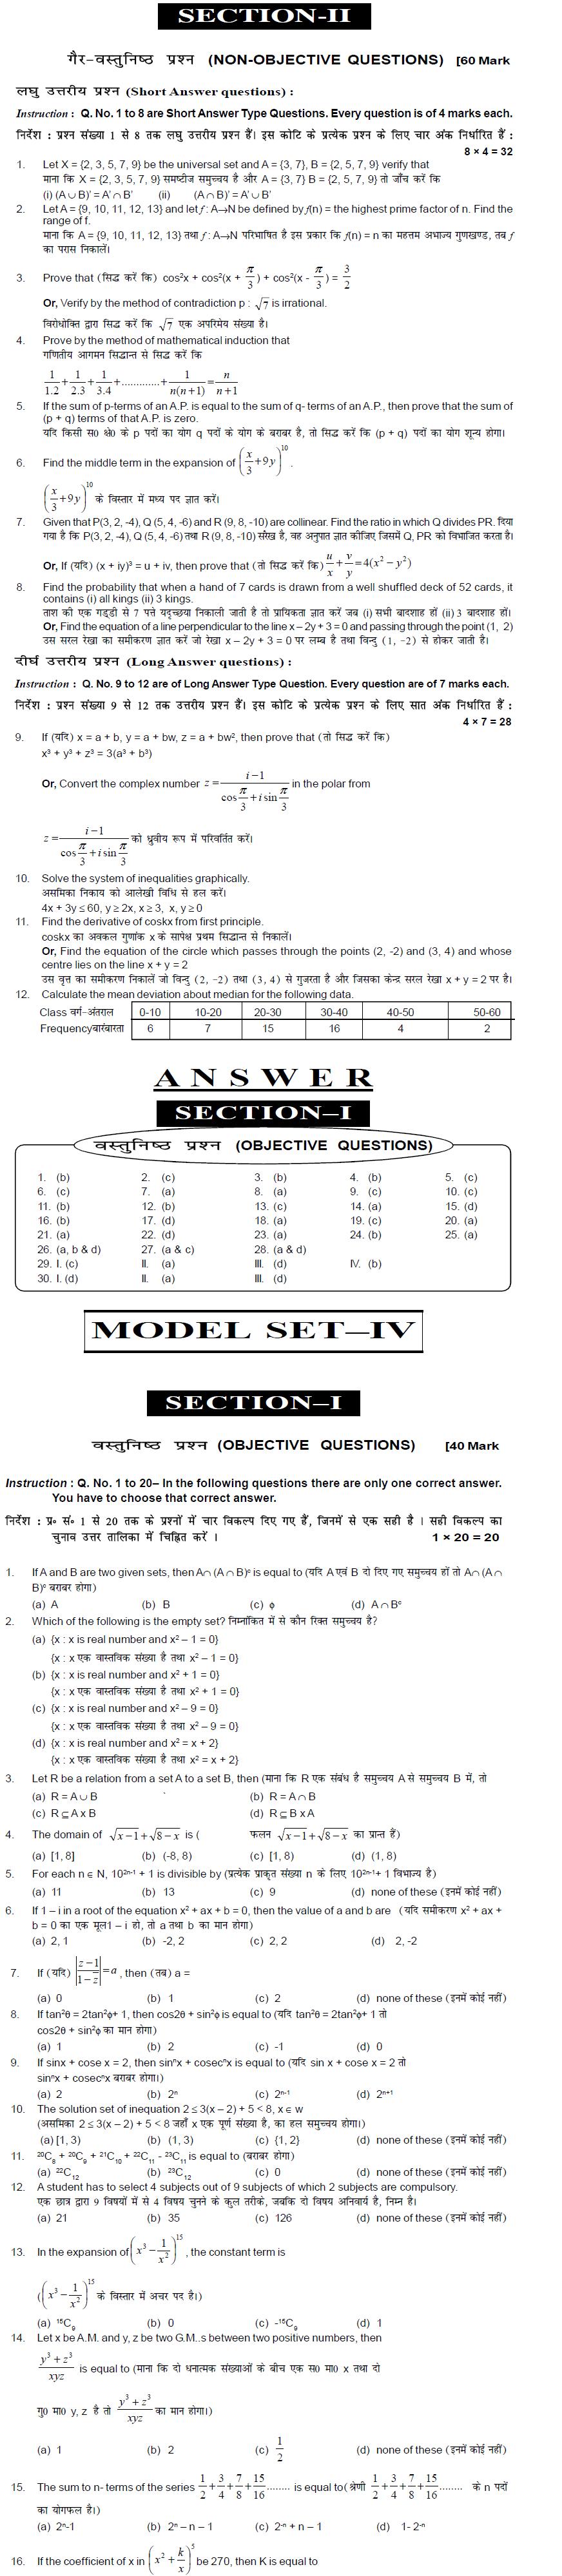 Bihar Board Class XI Science Model Question Papers - Mathematics